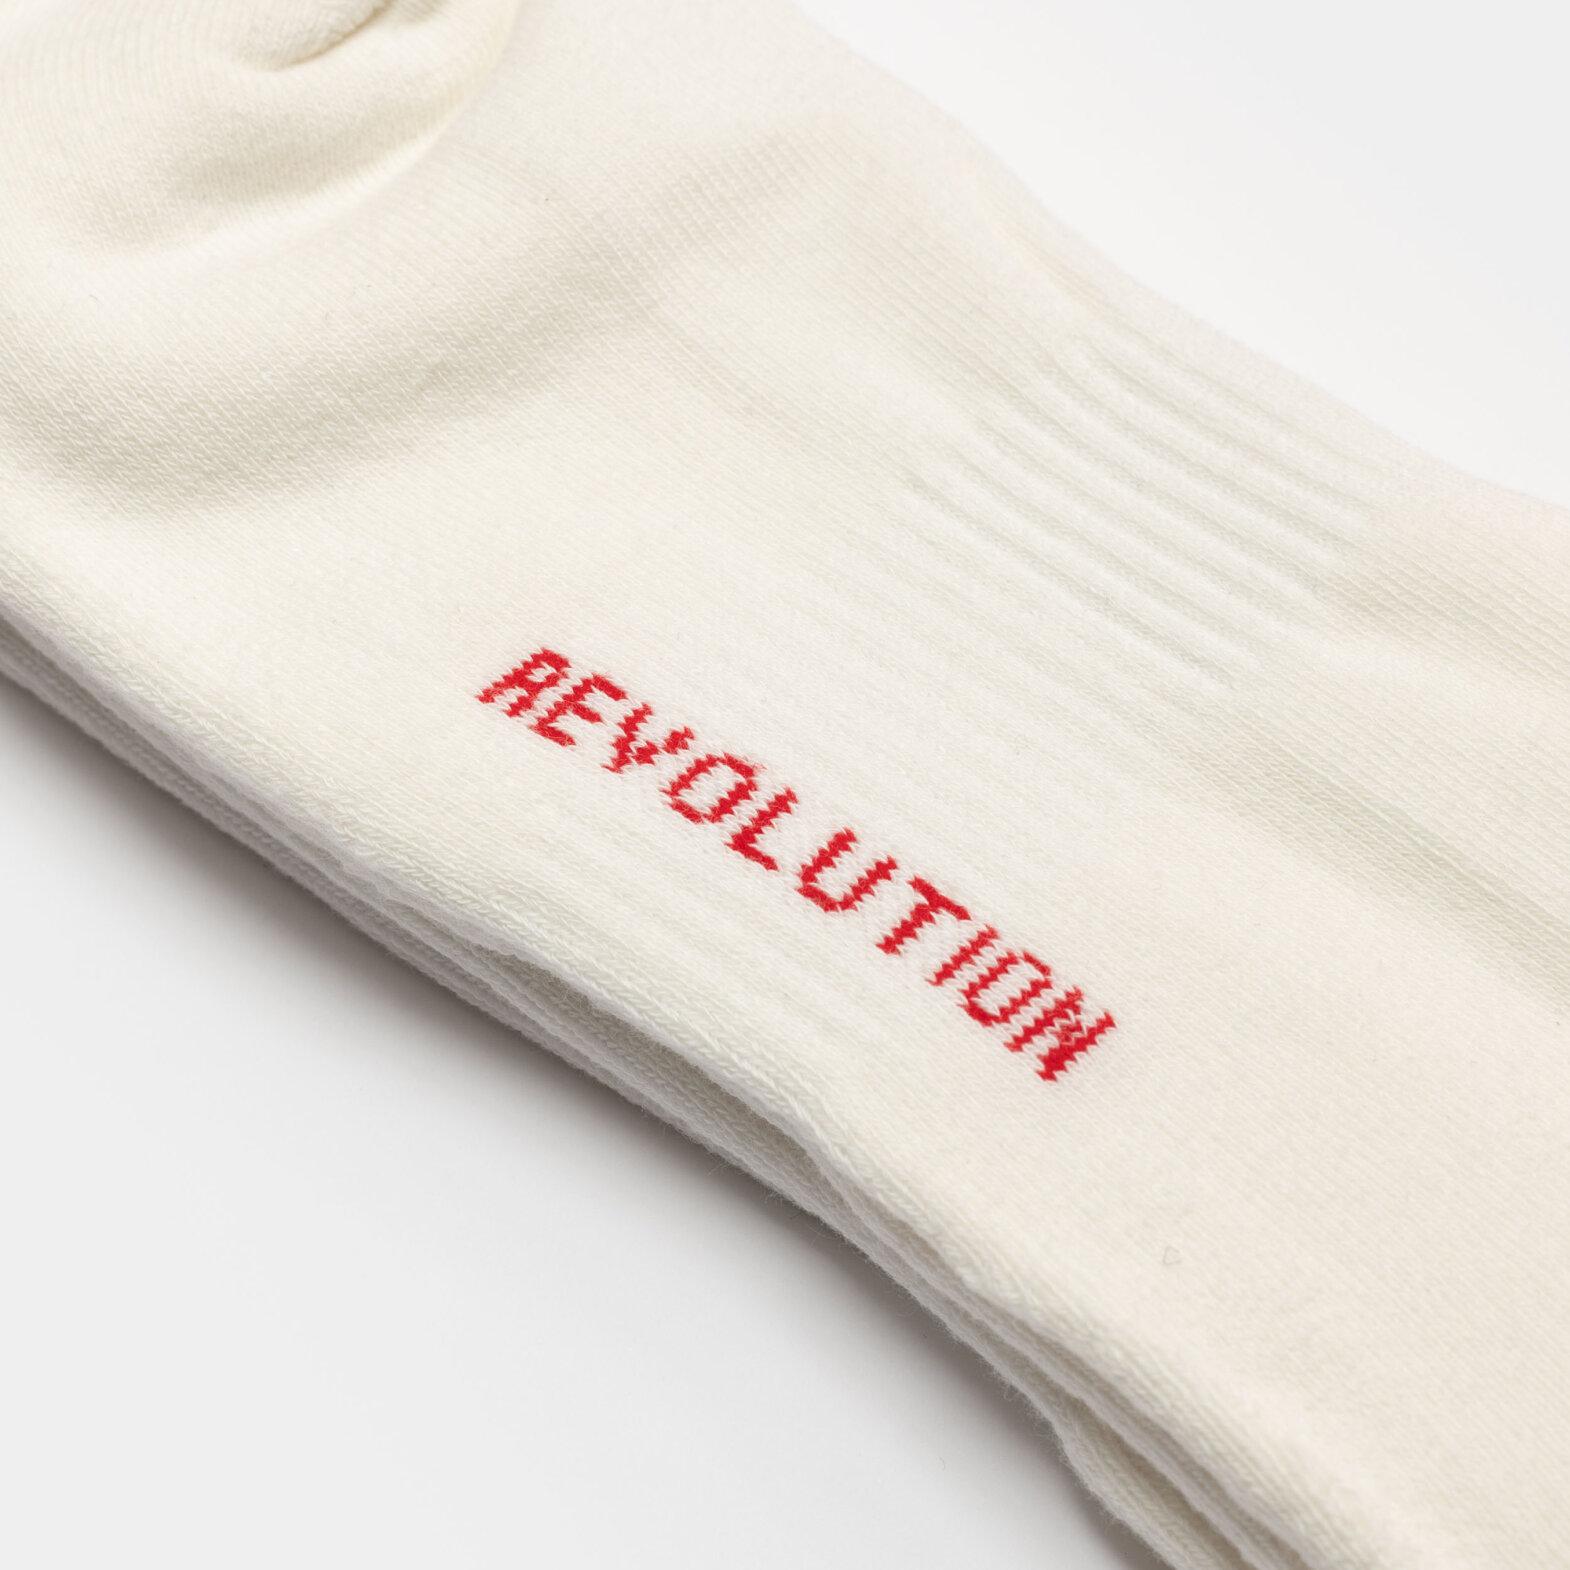 Revolution brand sock 1570x1570c 2 